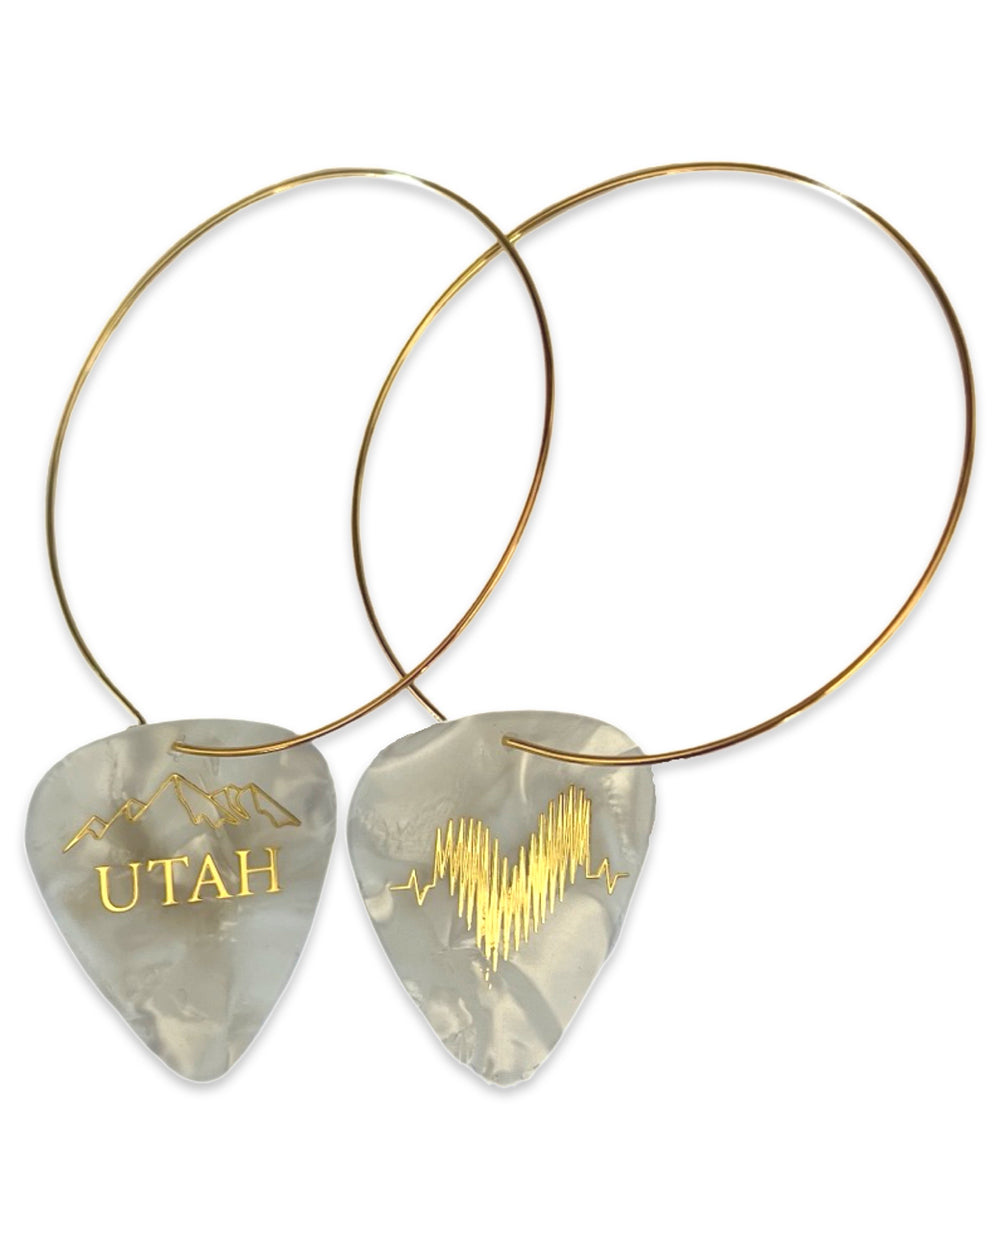 UTAH White Pearl Single Guitar Pick Earrings